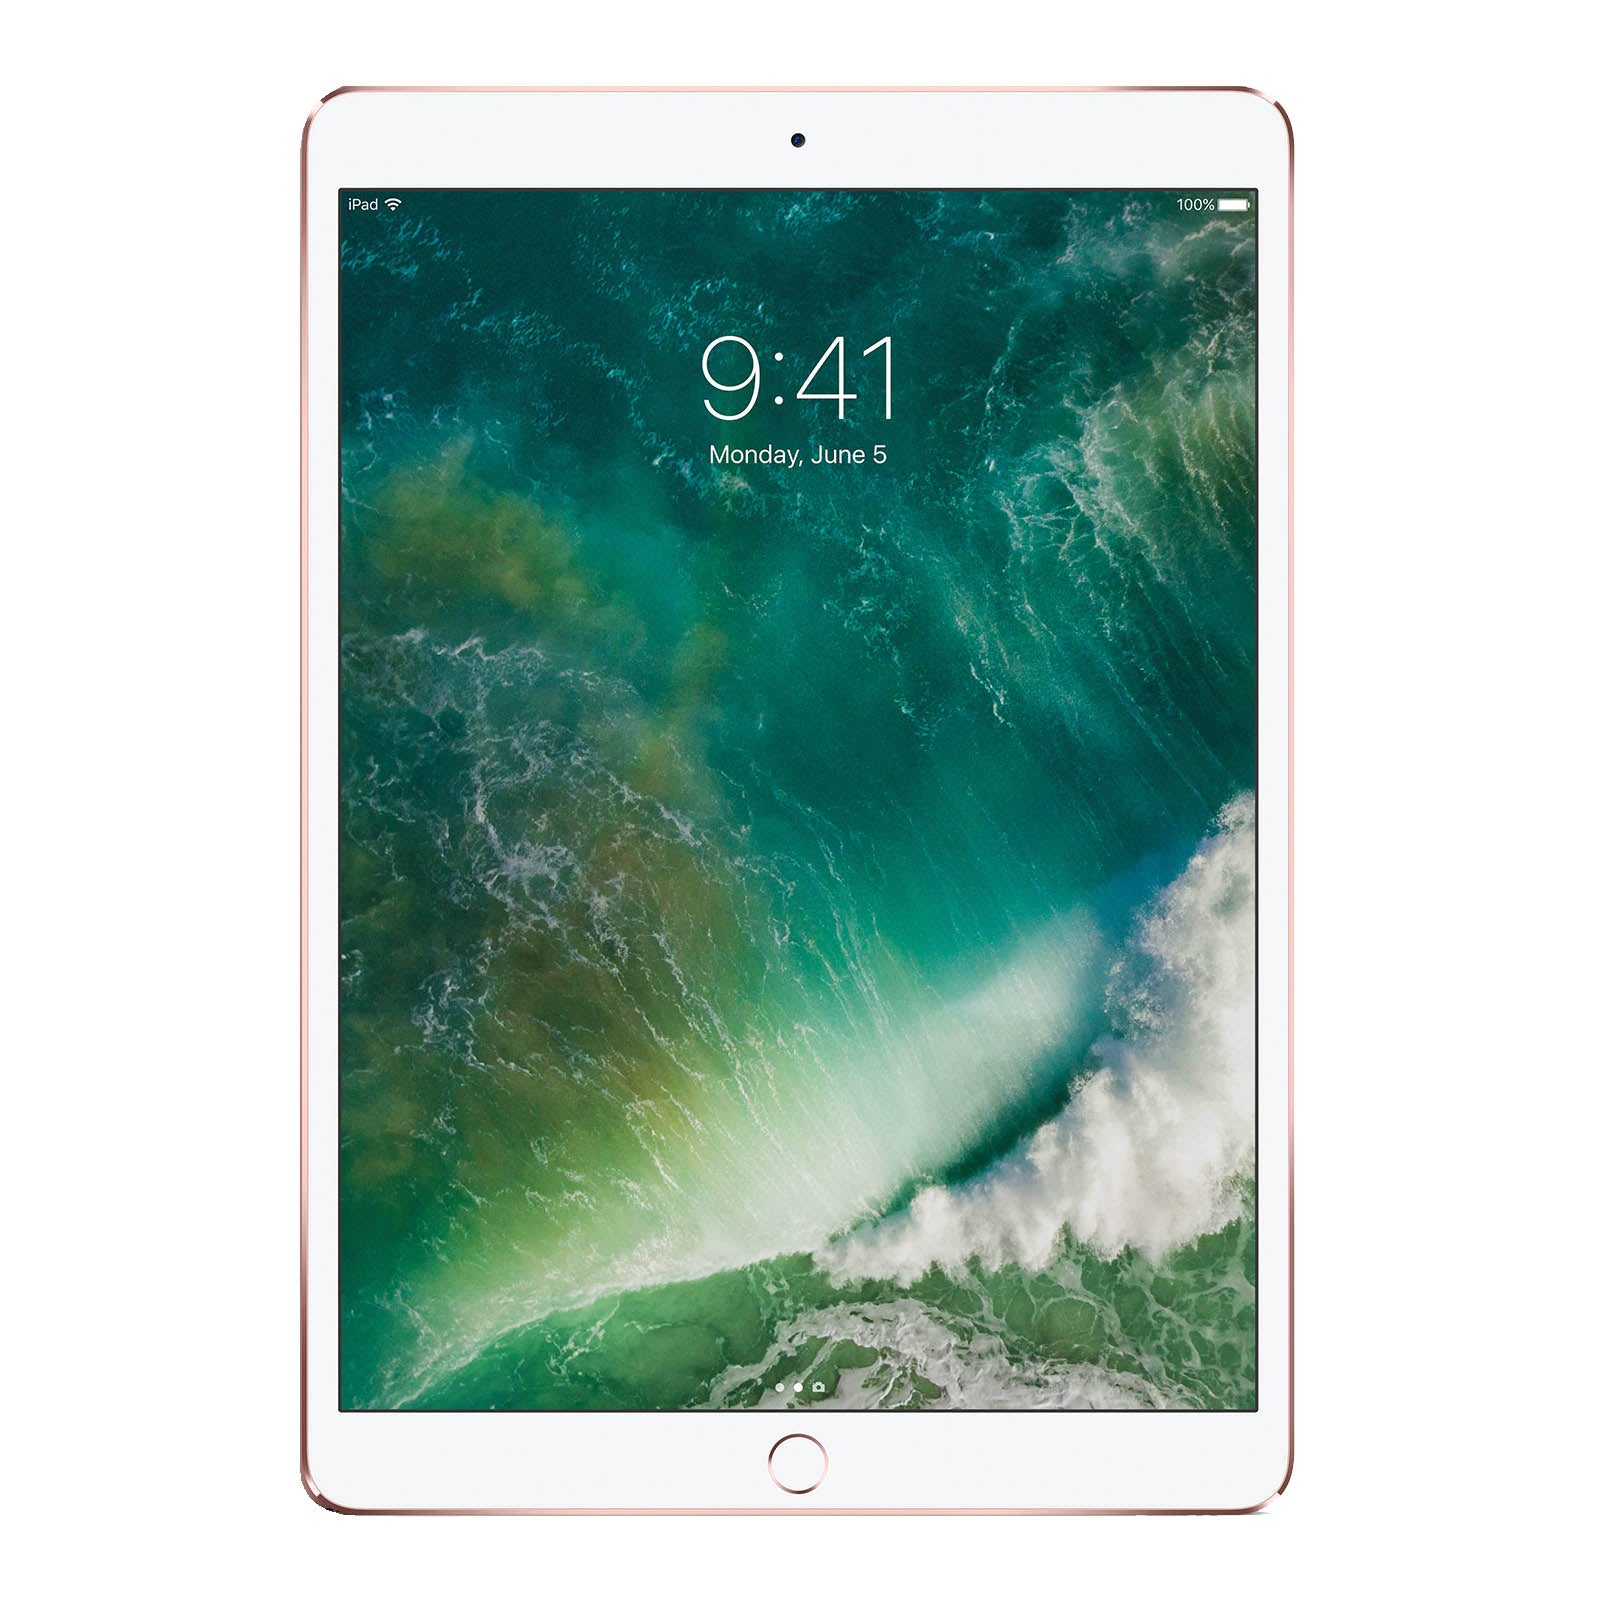 iPad Pro 10.5 Inch 64GB Rose Gold Very Good - WiFi